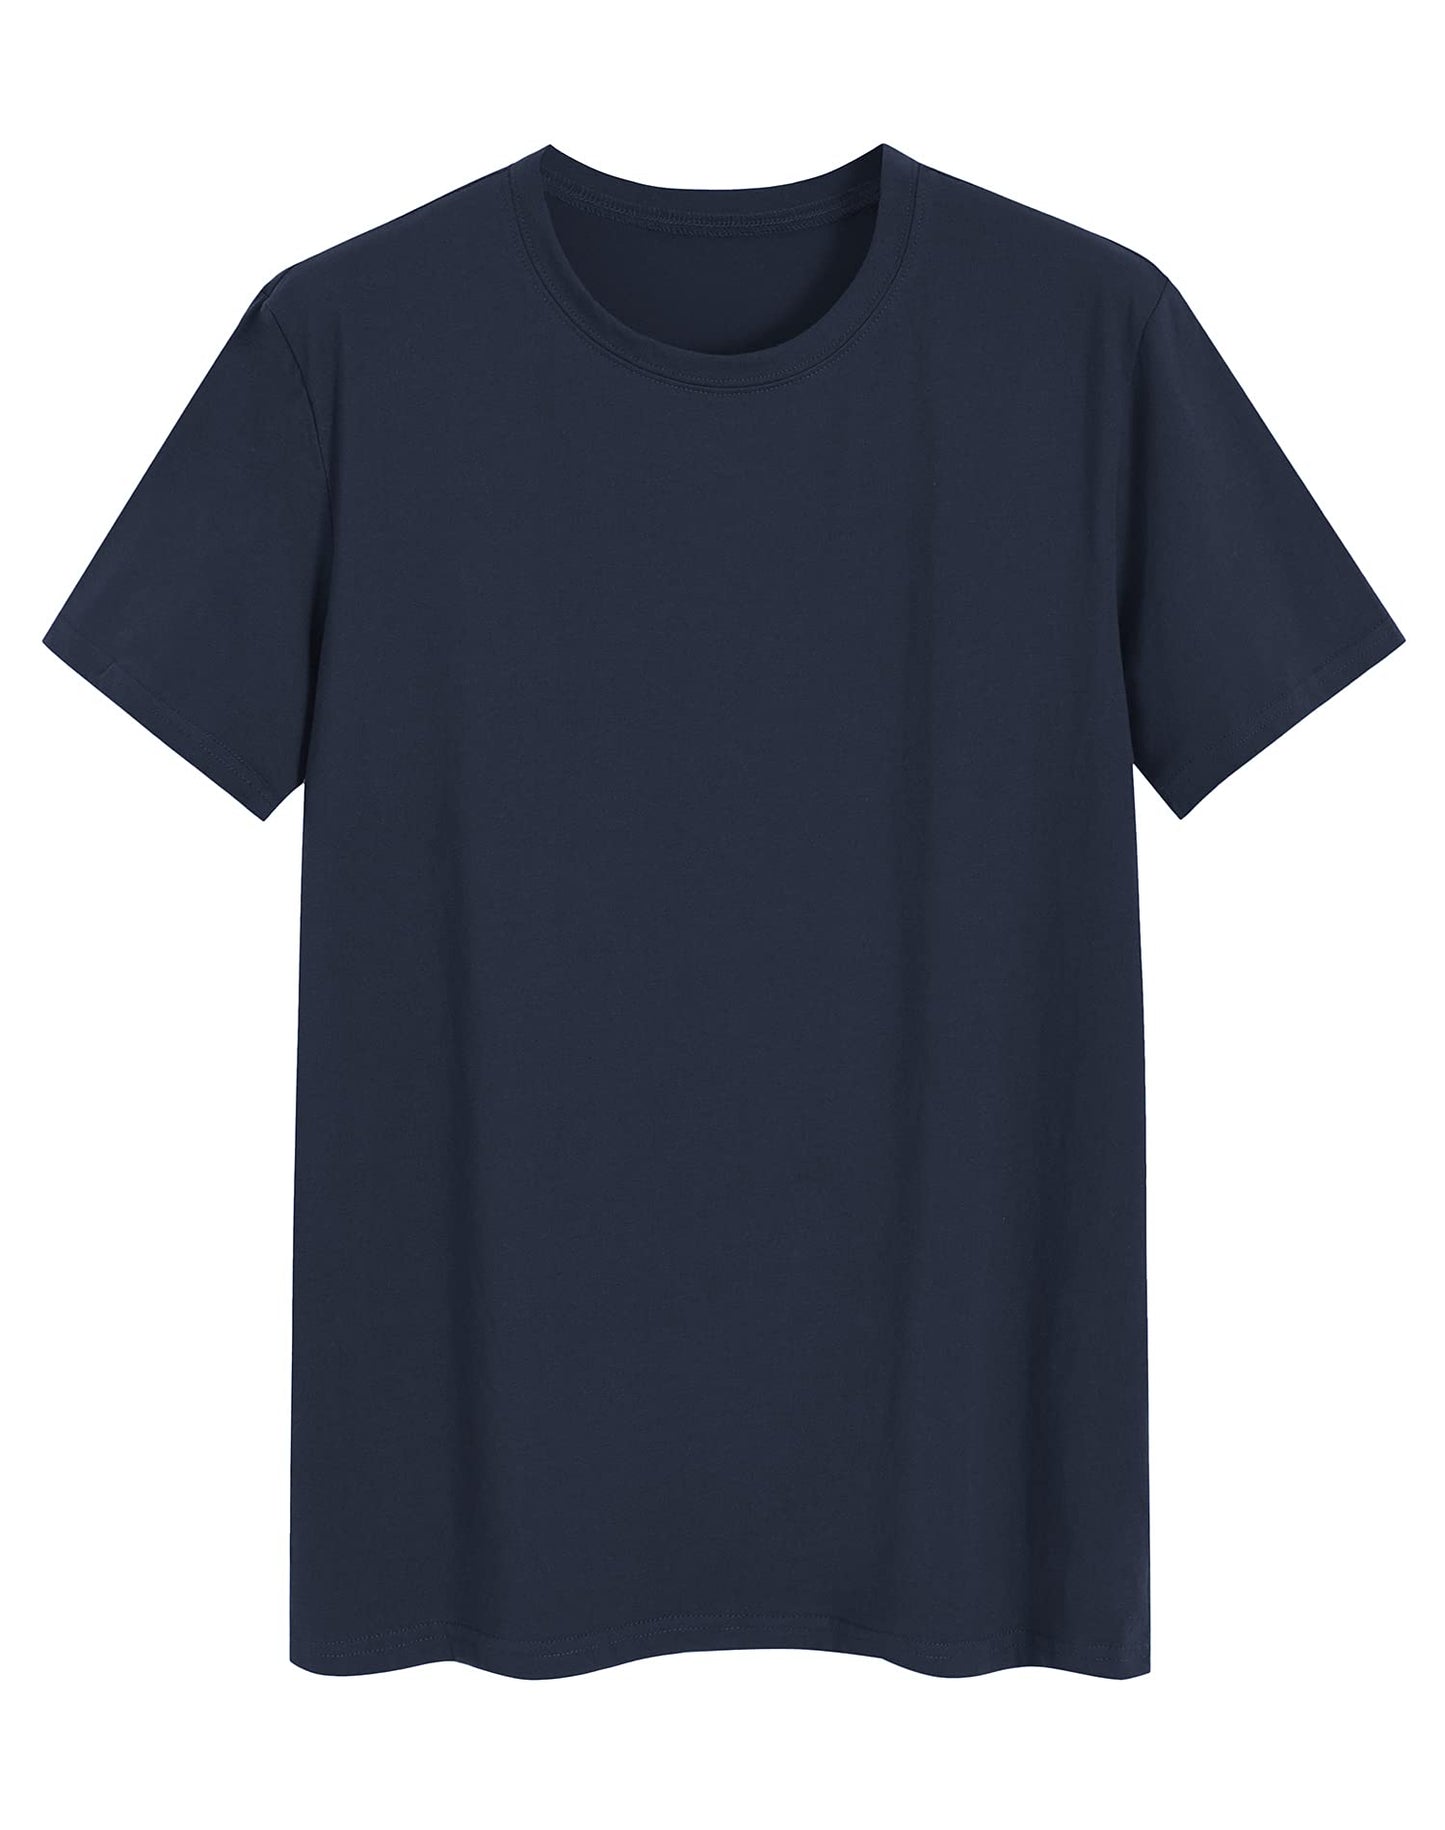 Men's Basic Cotton Knit Sleep T-Shirt Comfortable Pajama Shirt - Latuza